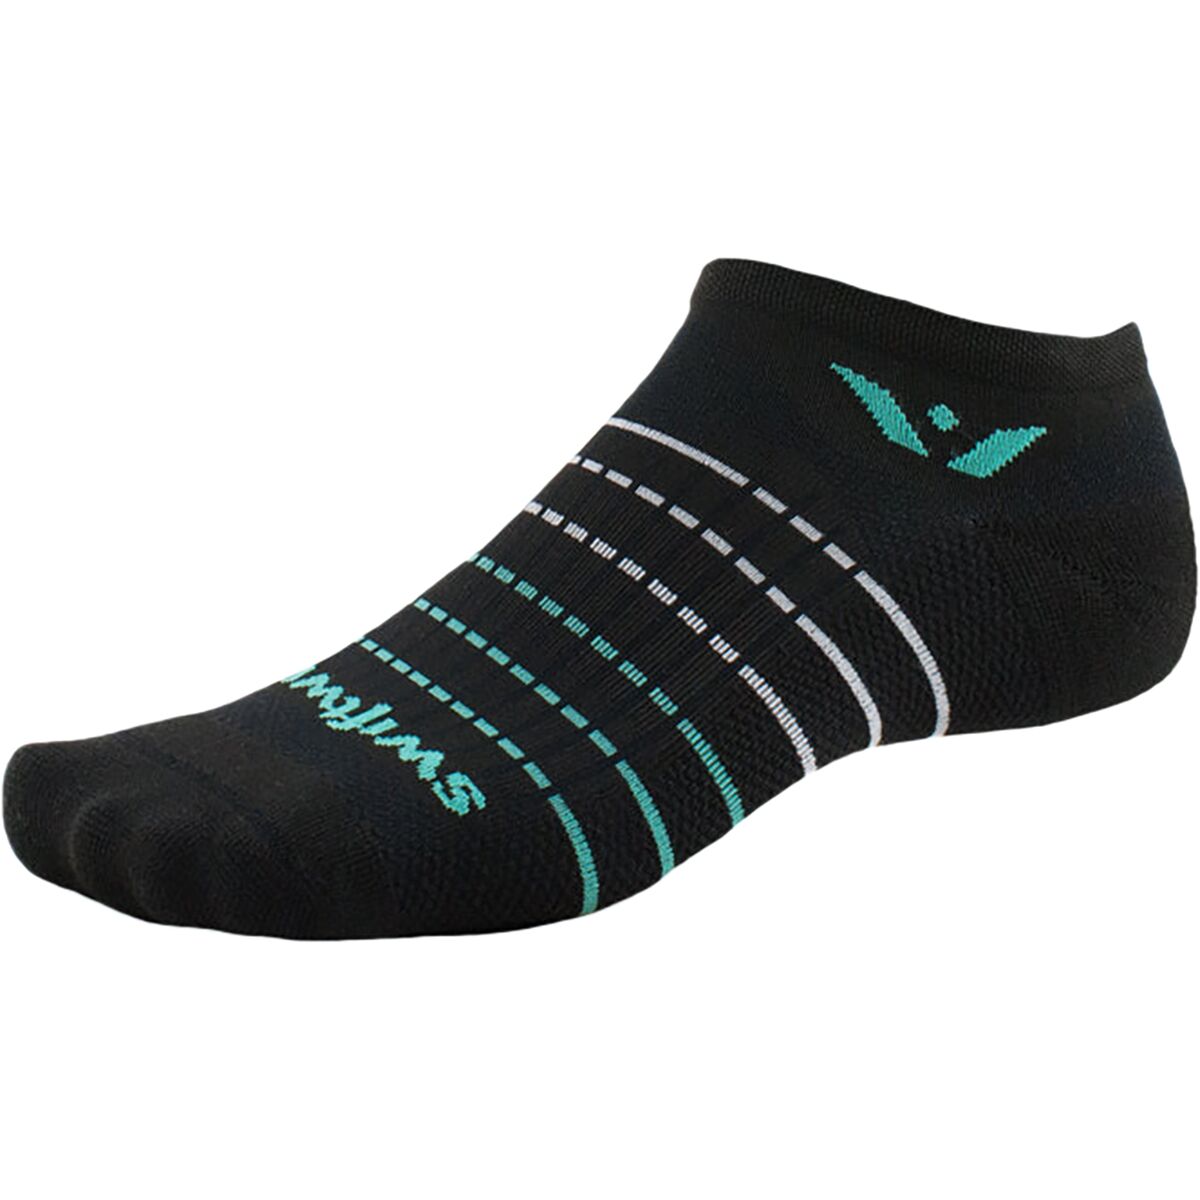 Swiftwick Aspire Zero Stripe Sock Stripe Black Aqua, XL - Men's